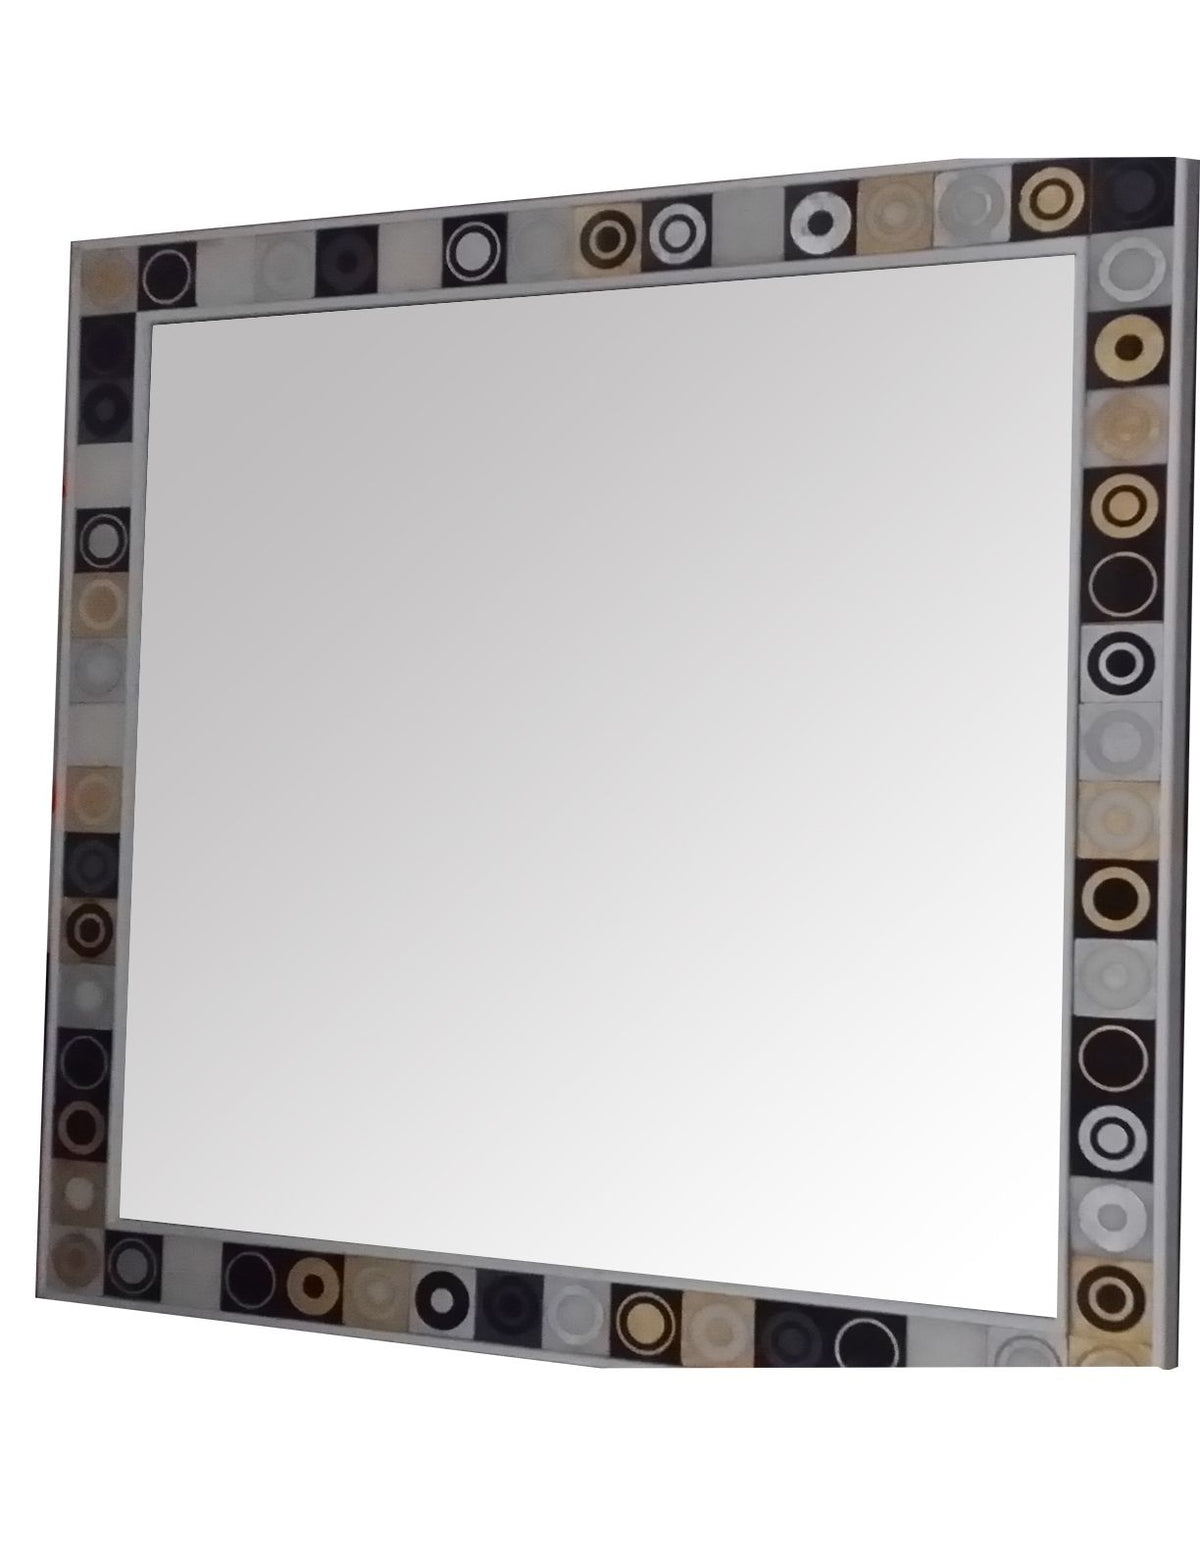 WB & G Italian Tiles Mirror